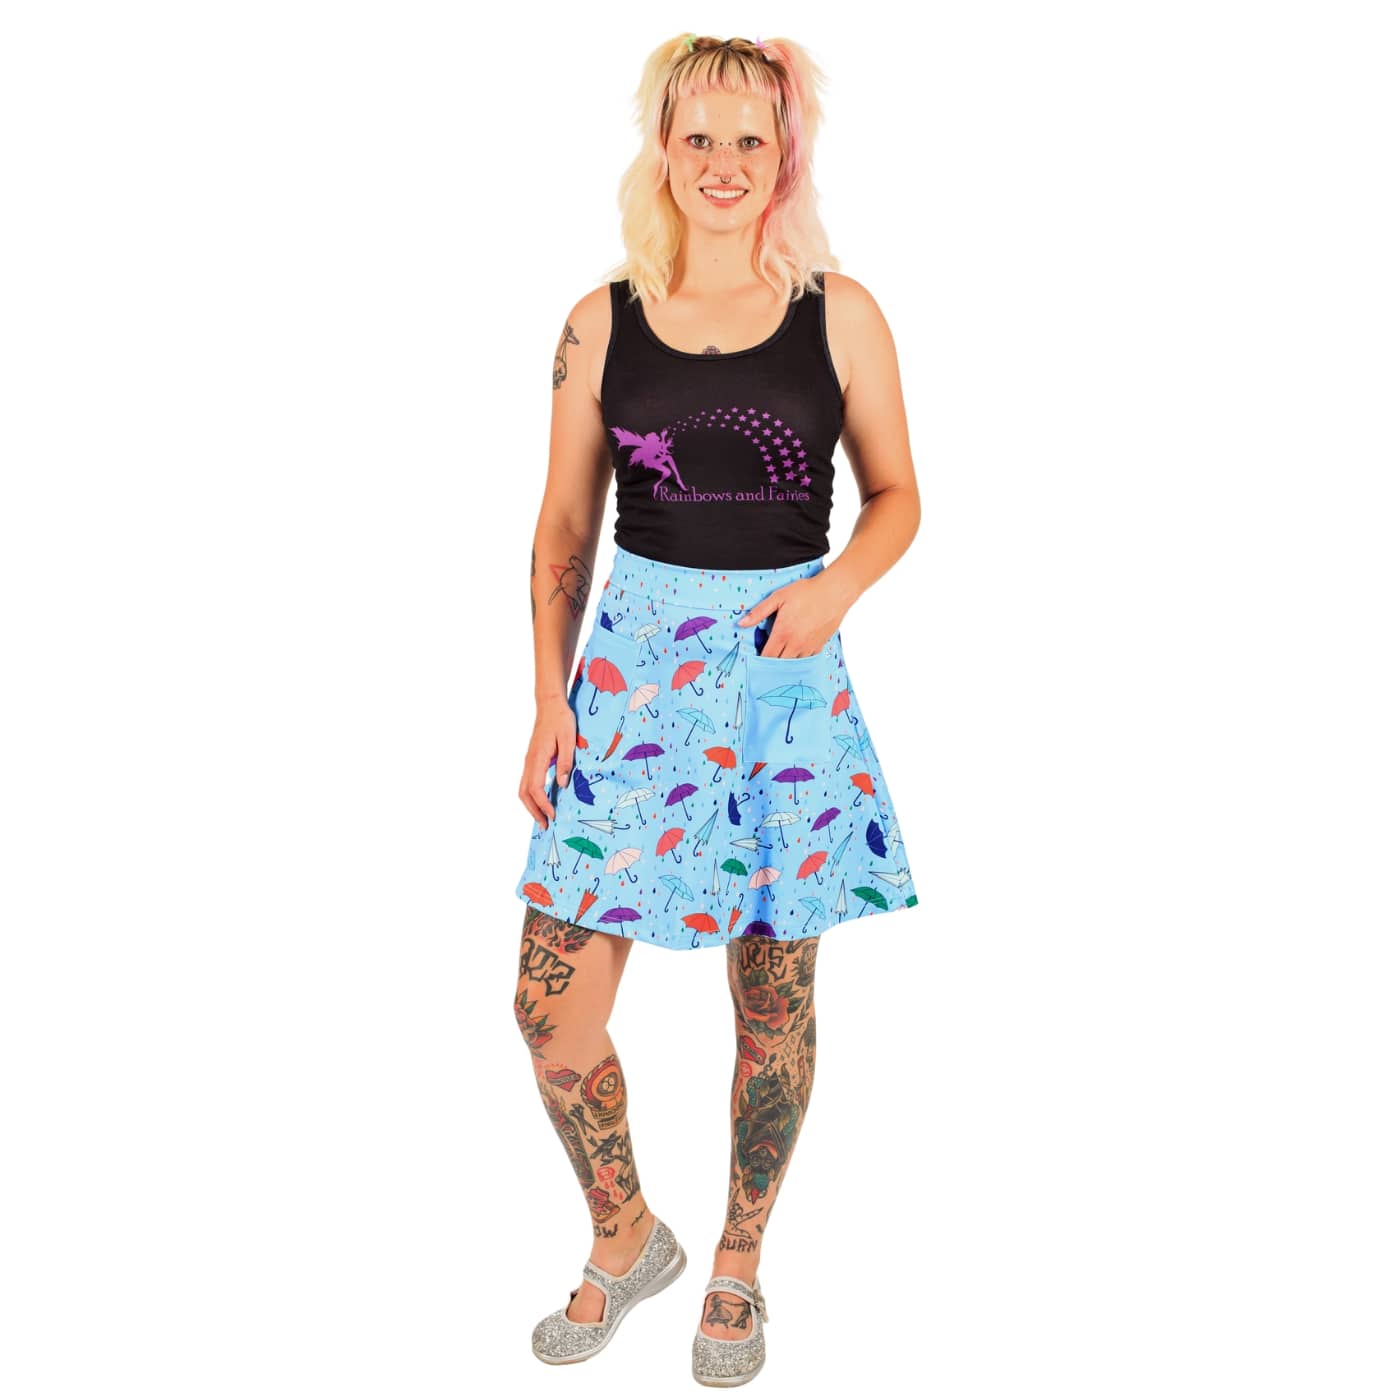 Brolly Short Skirt by RainbowsAndFairies.com (Umbrella - Rain - Raindrops - Skirt With Pockets - Rockabilly - Vintage Inspired) - SKU: CL_SHORT_BROLL_ORG - Pic 02